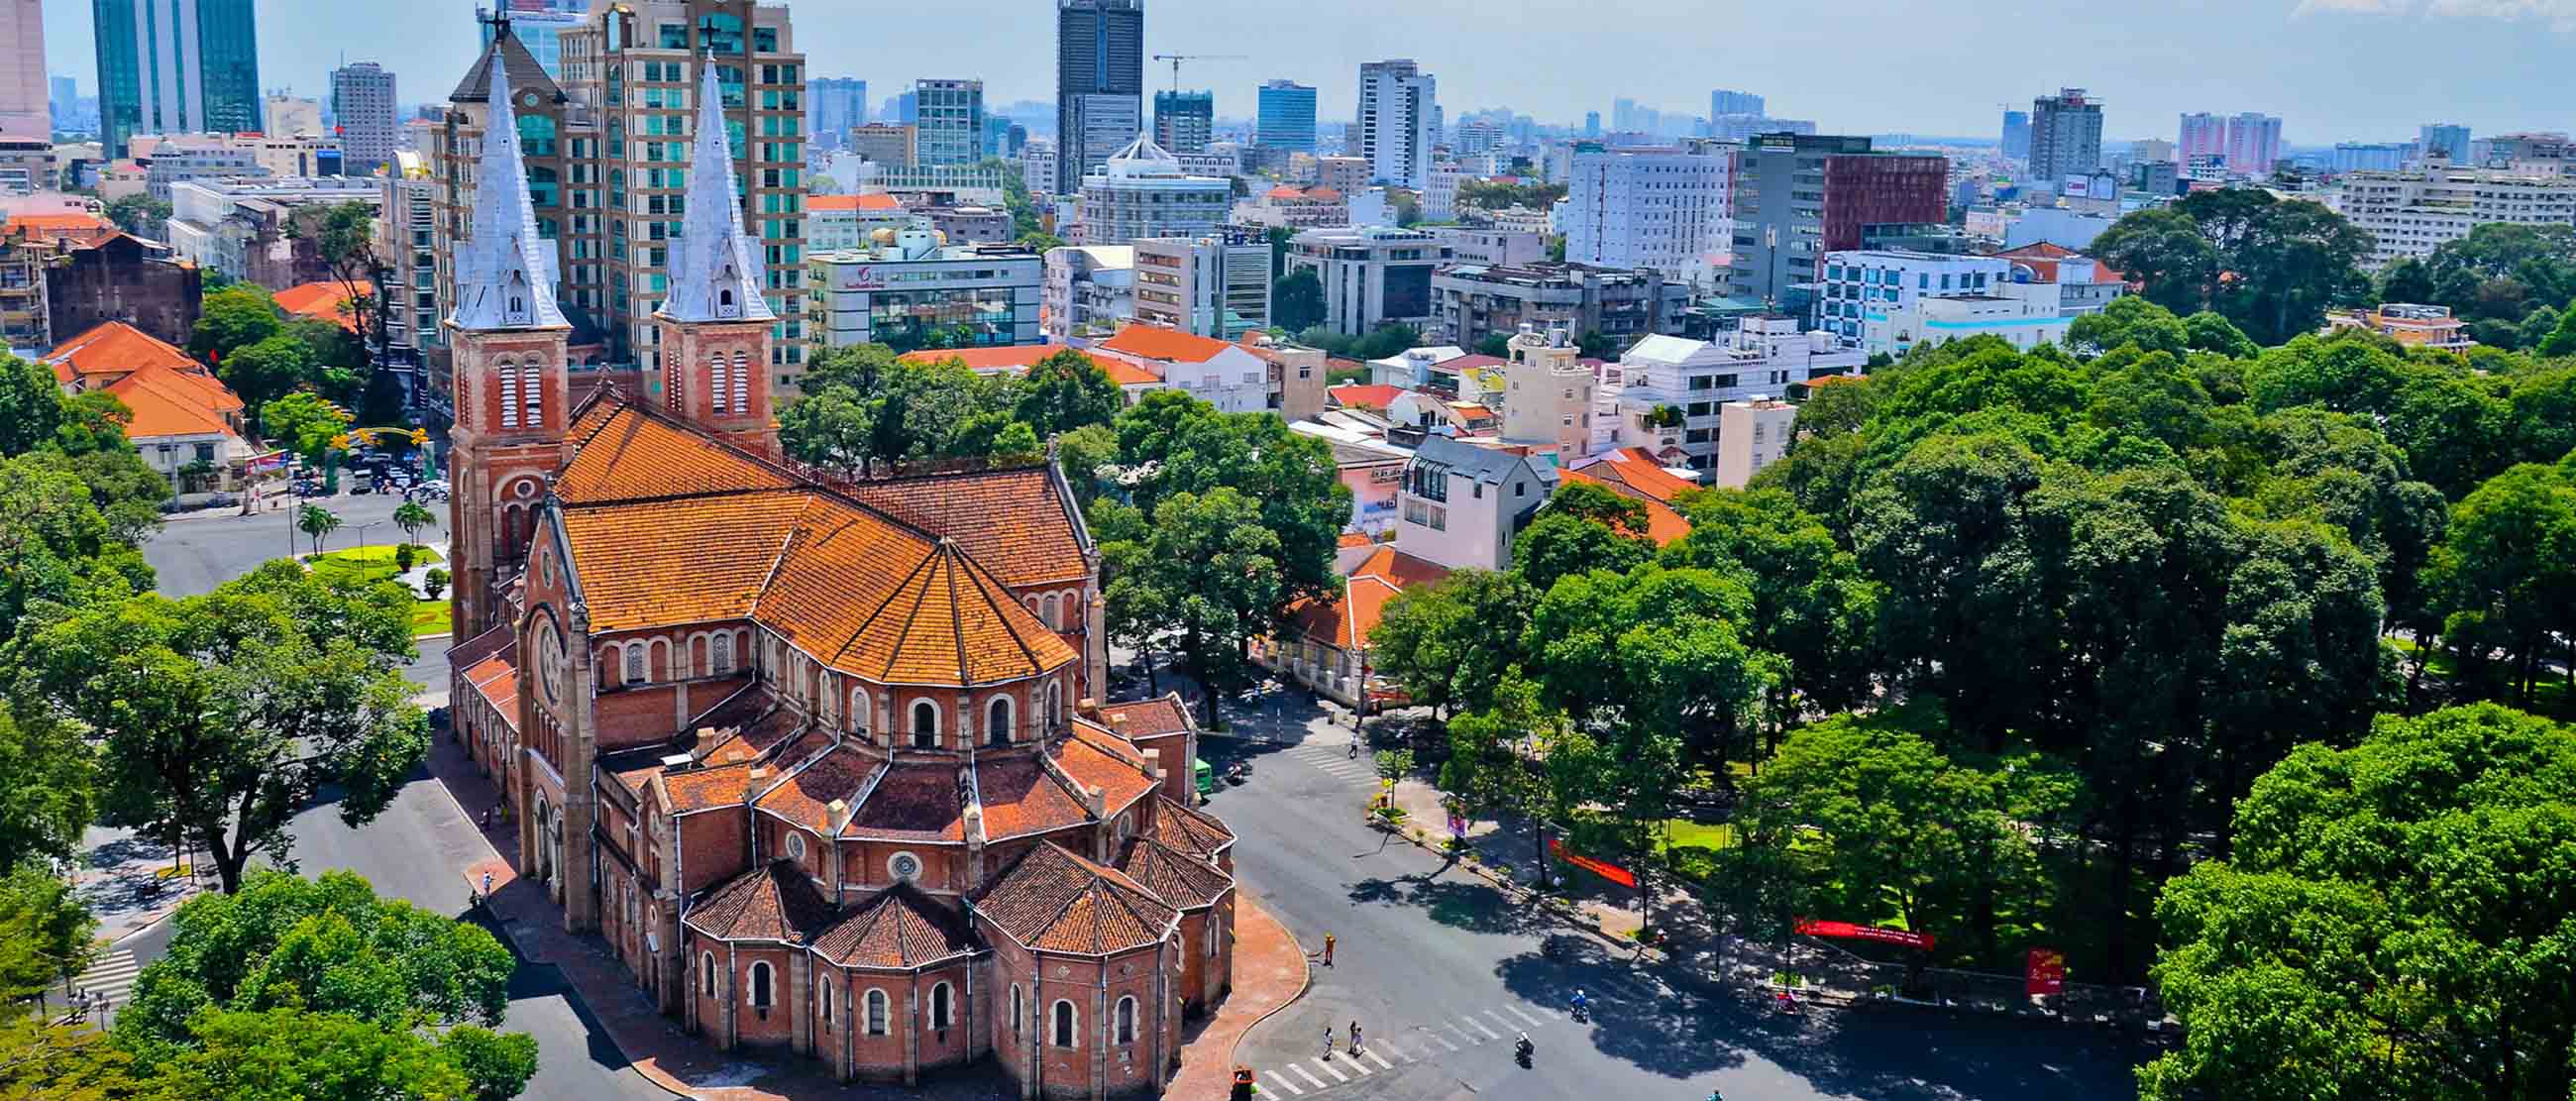 Ho Chi Minh City – The city that never sleeps